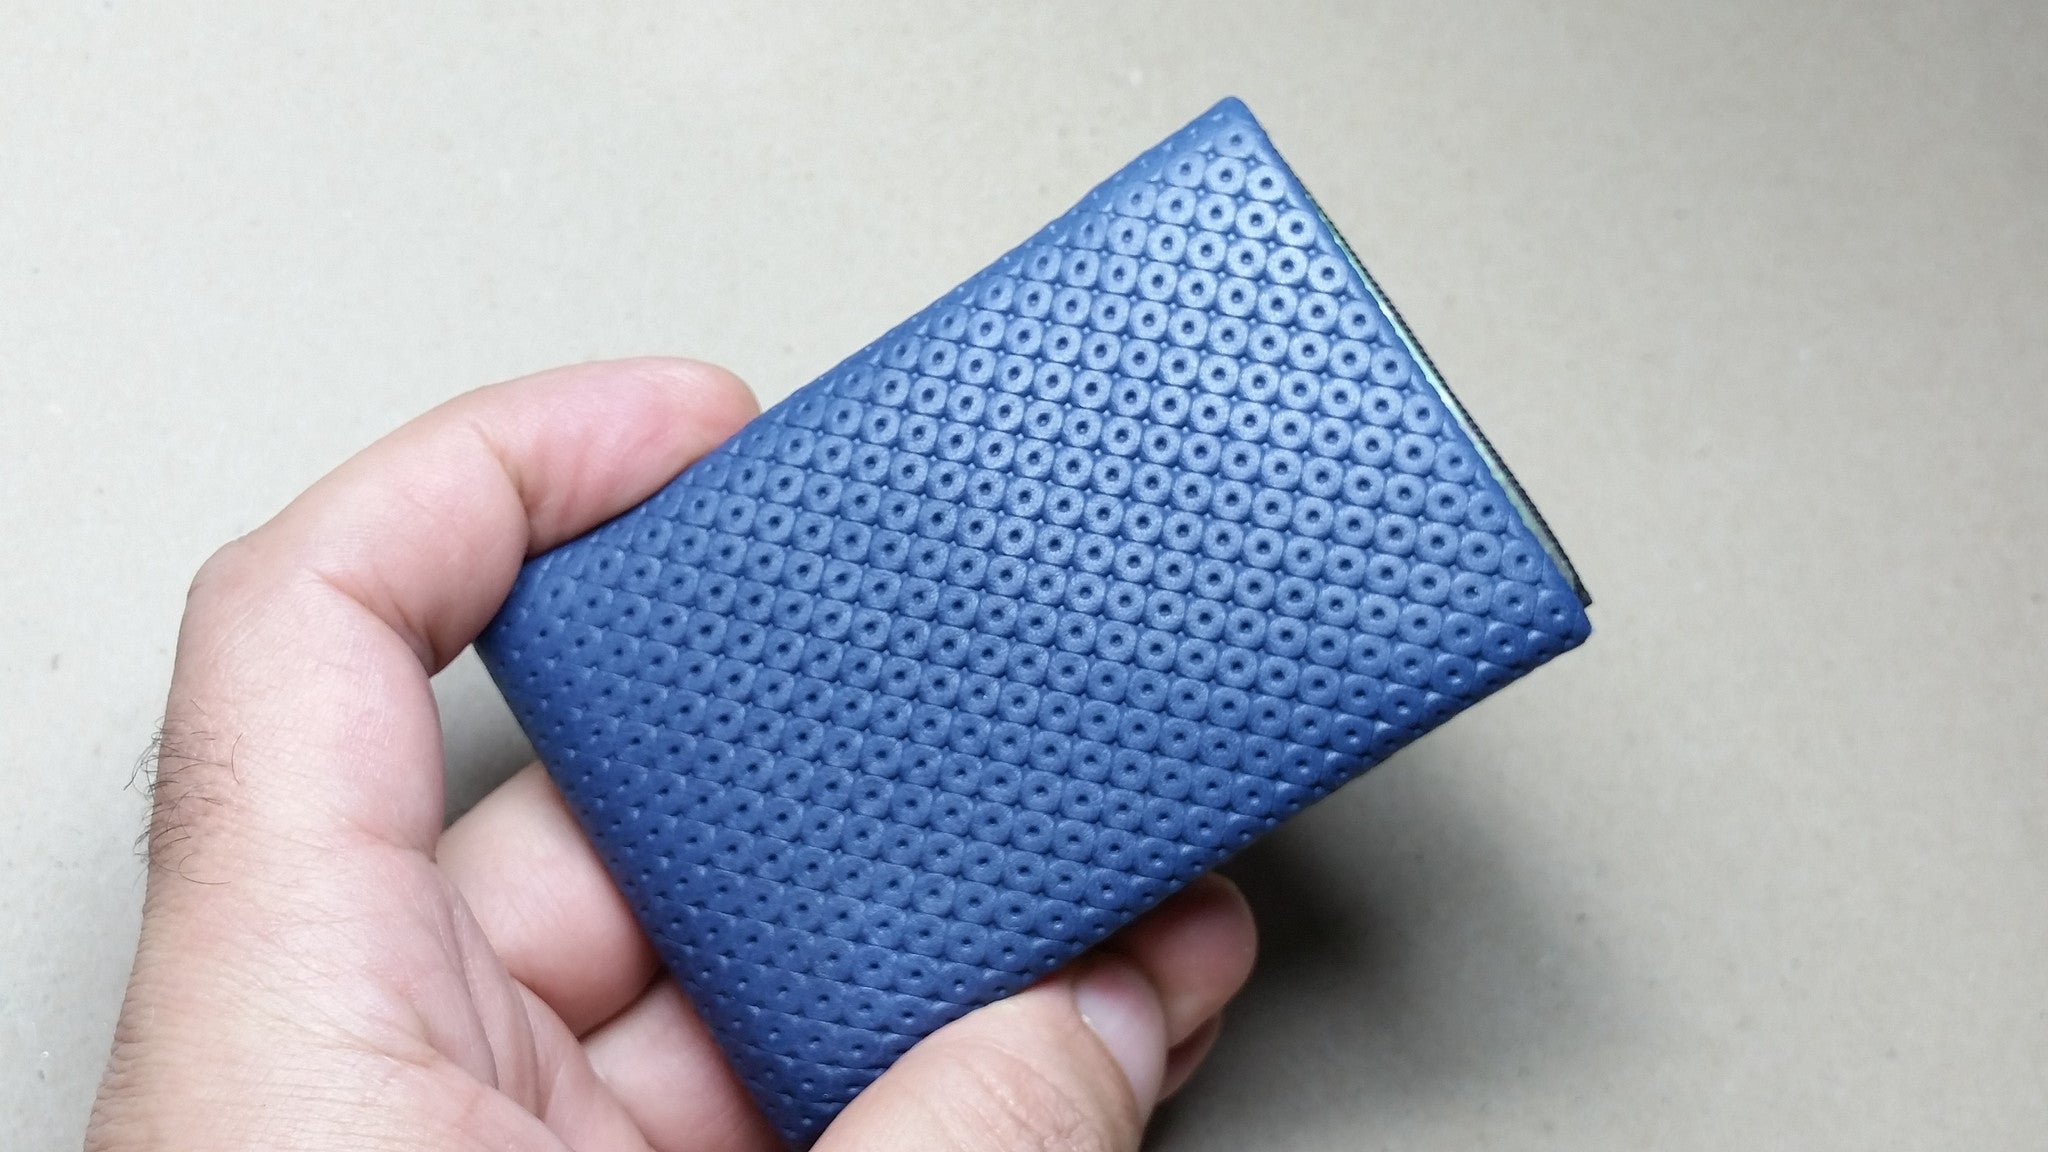 Nero Wallet 01 Design Series - The Ultimate Minimalist Wallet - RFID protection 4 +1 - minimalist mens wallet